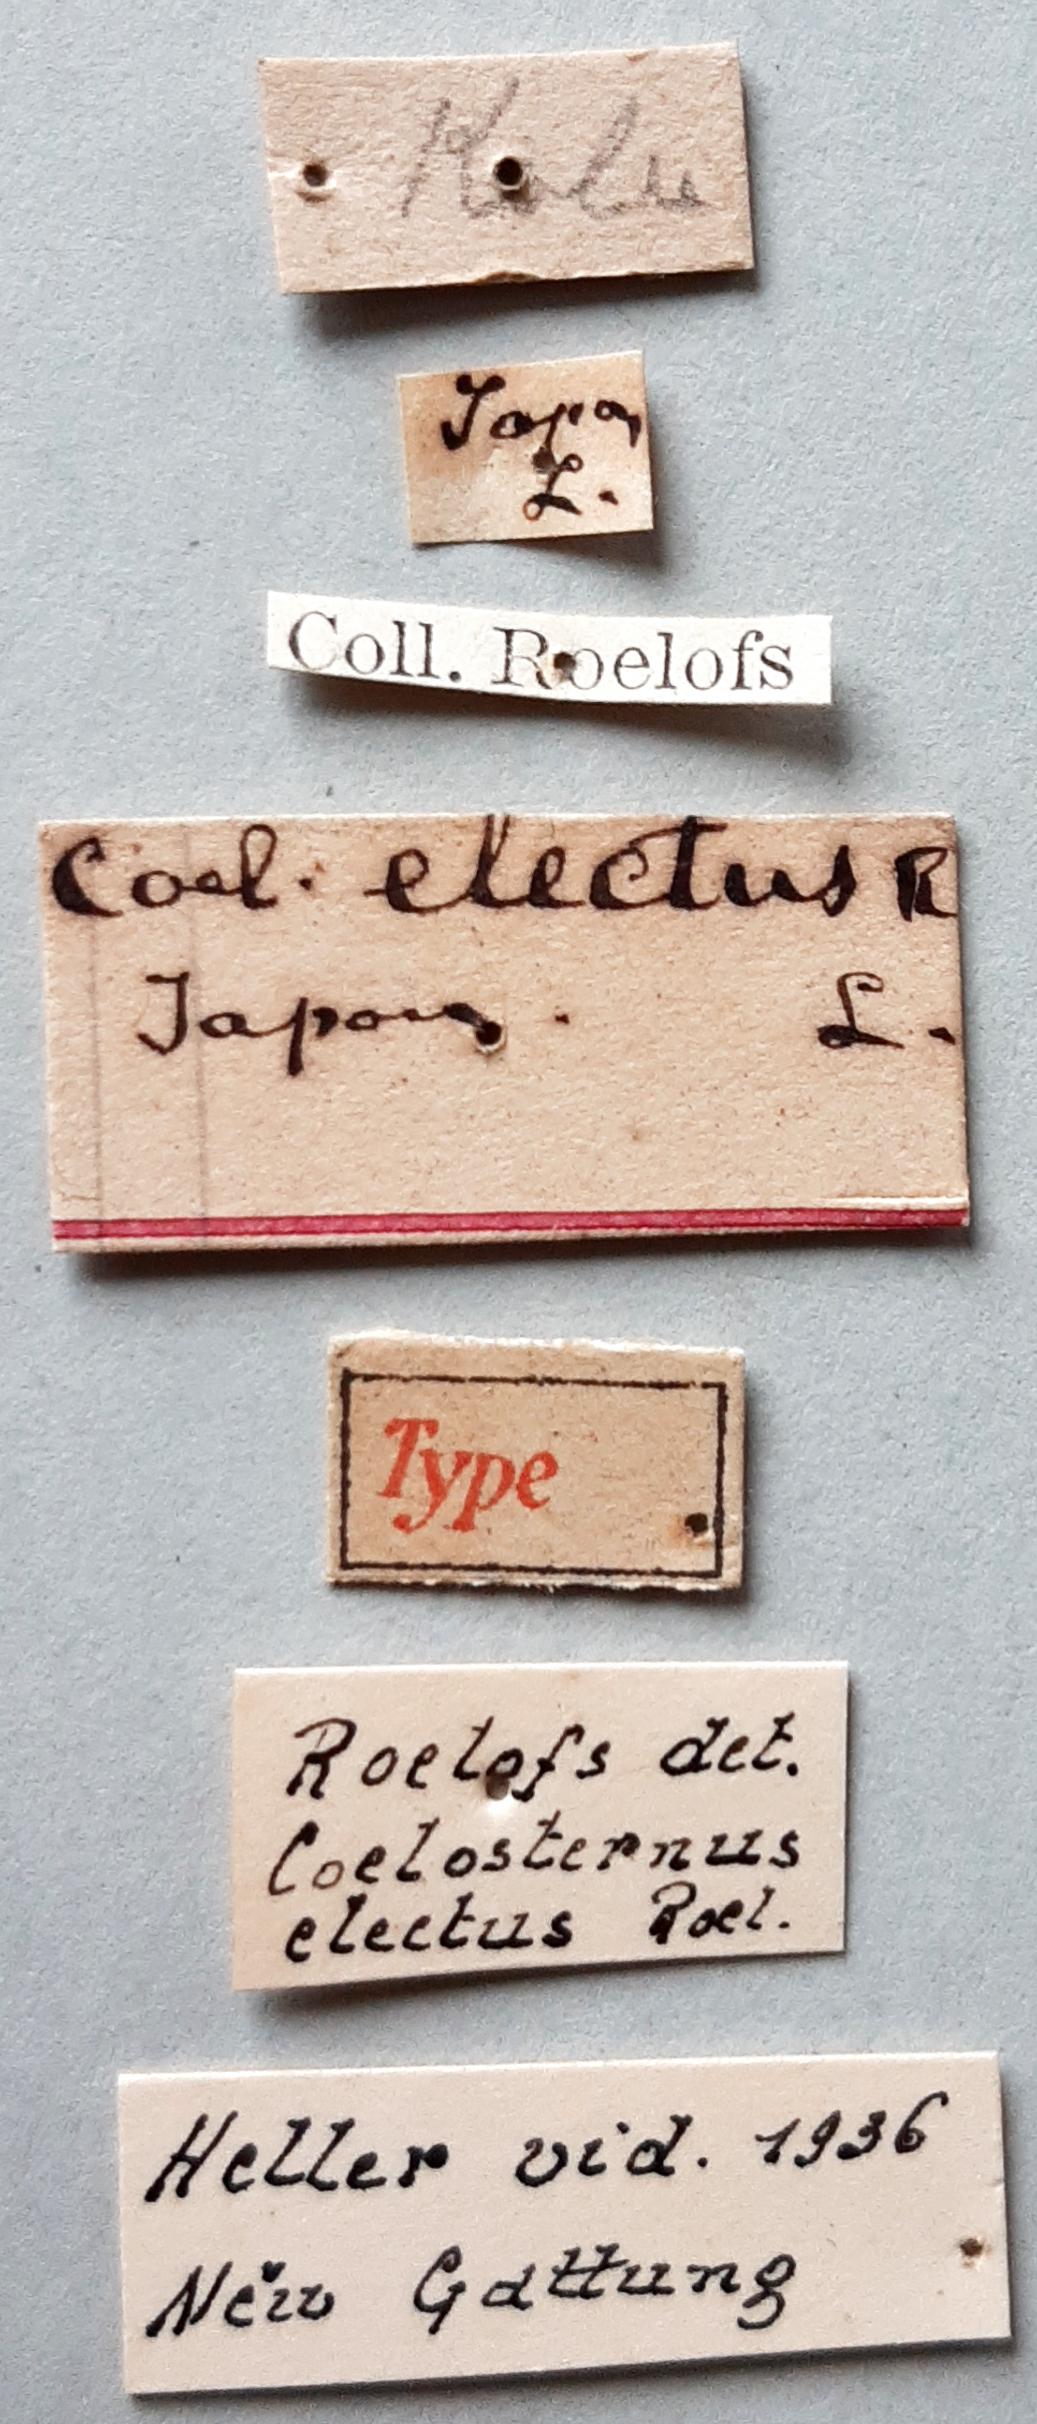 Coelosternus electus Ht labels